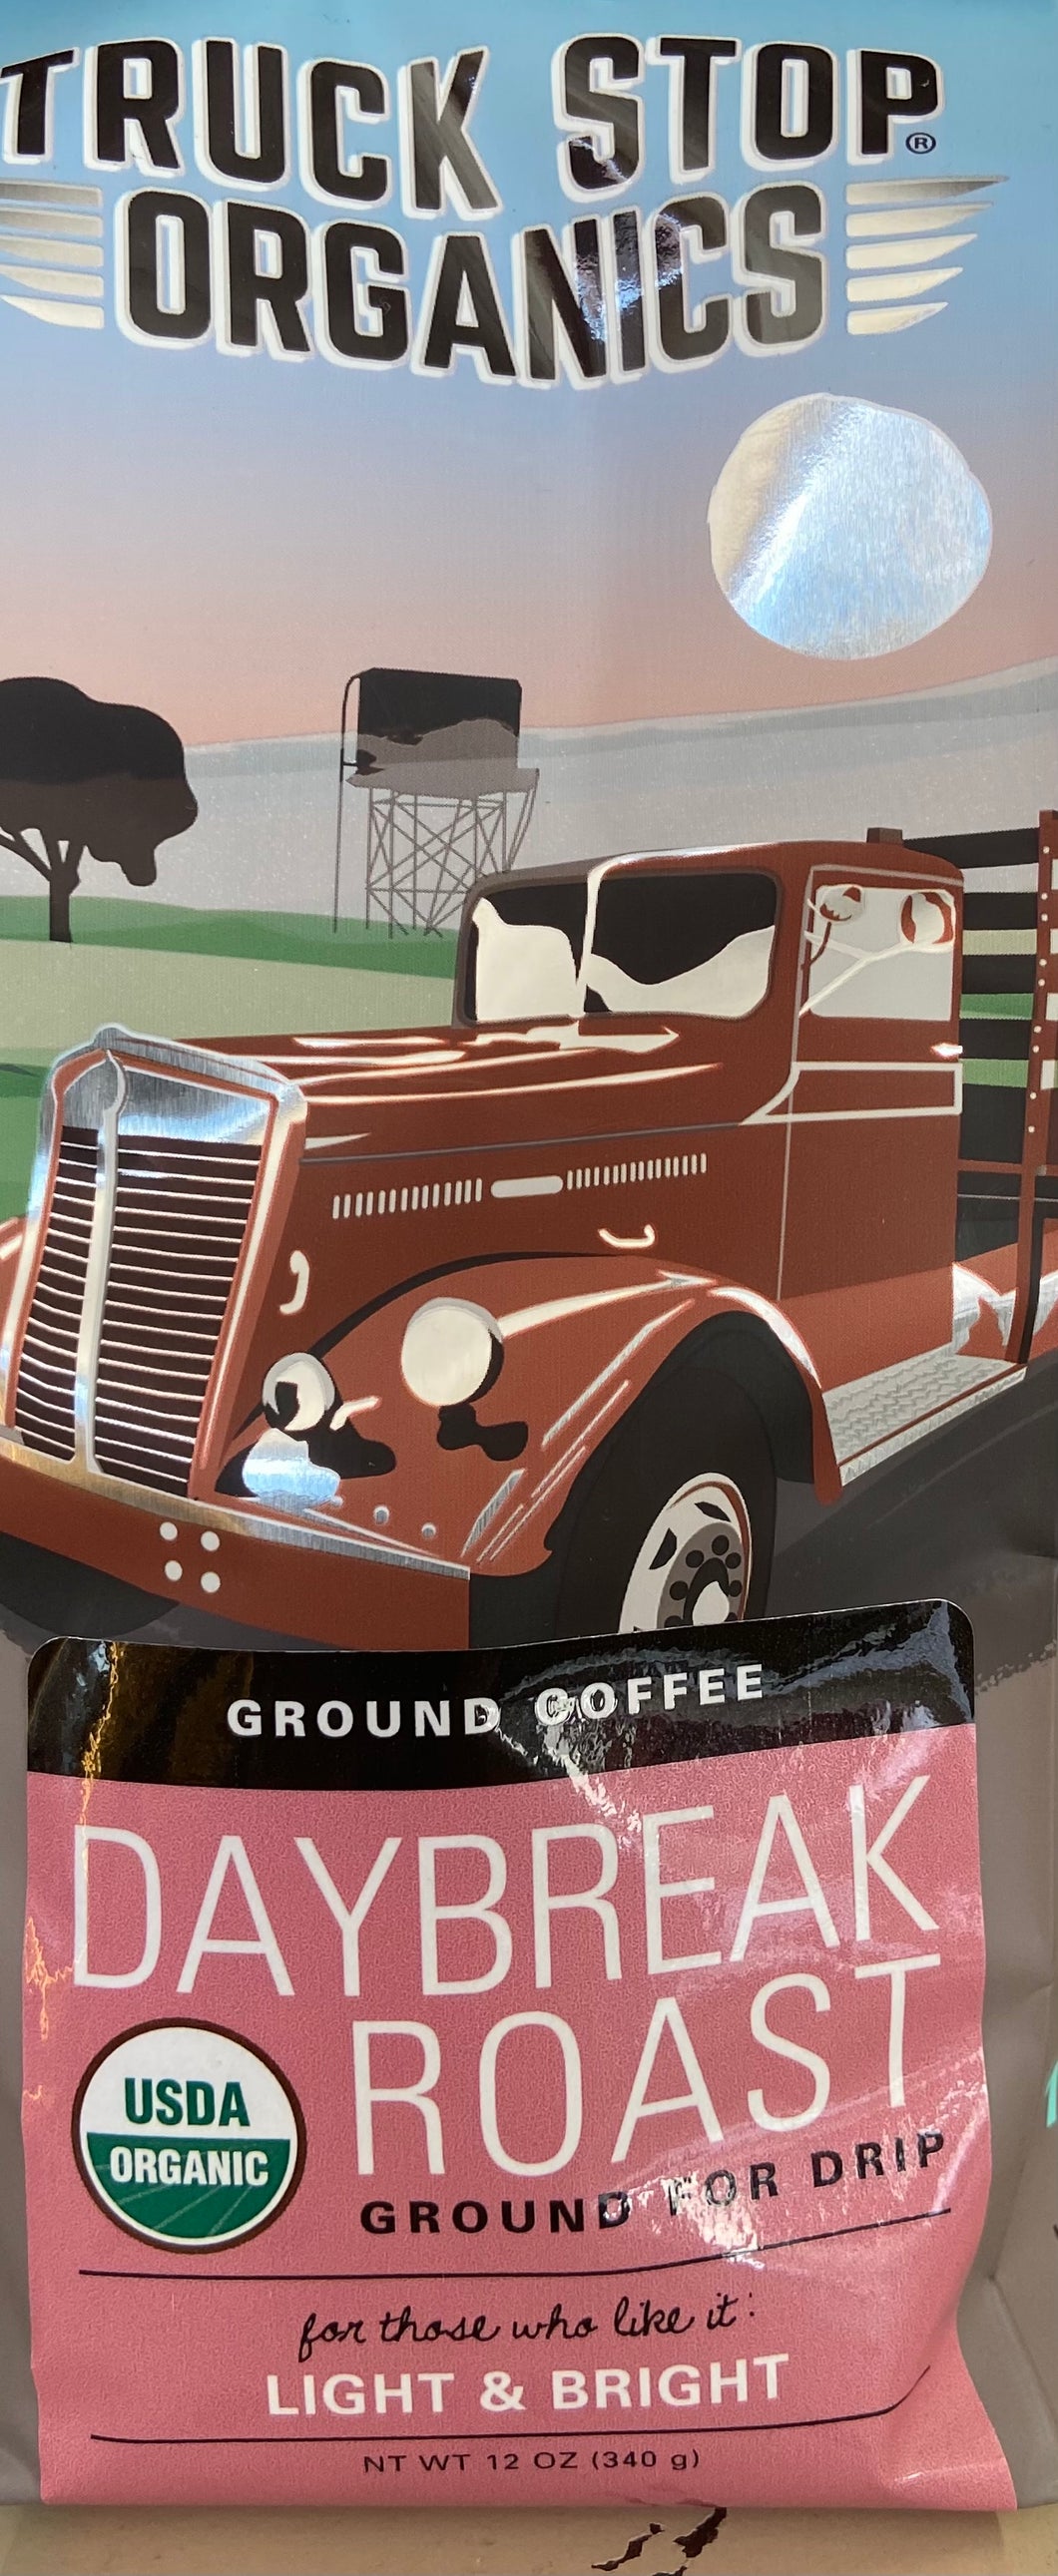 Truck Stop organics, ground coffee, daybreak roast, light and bright